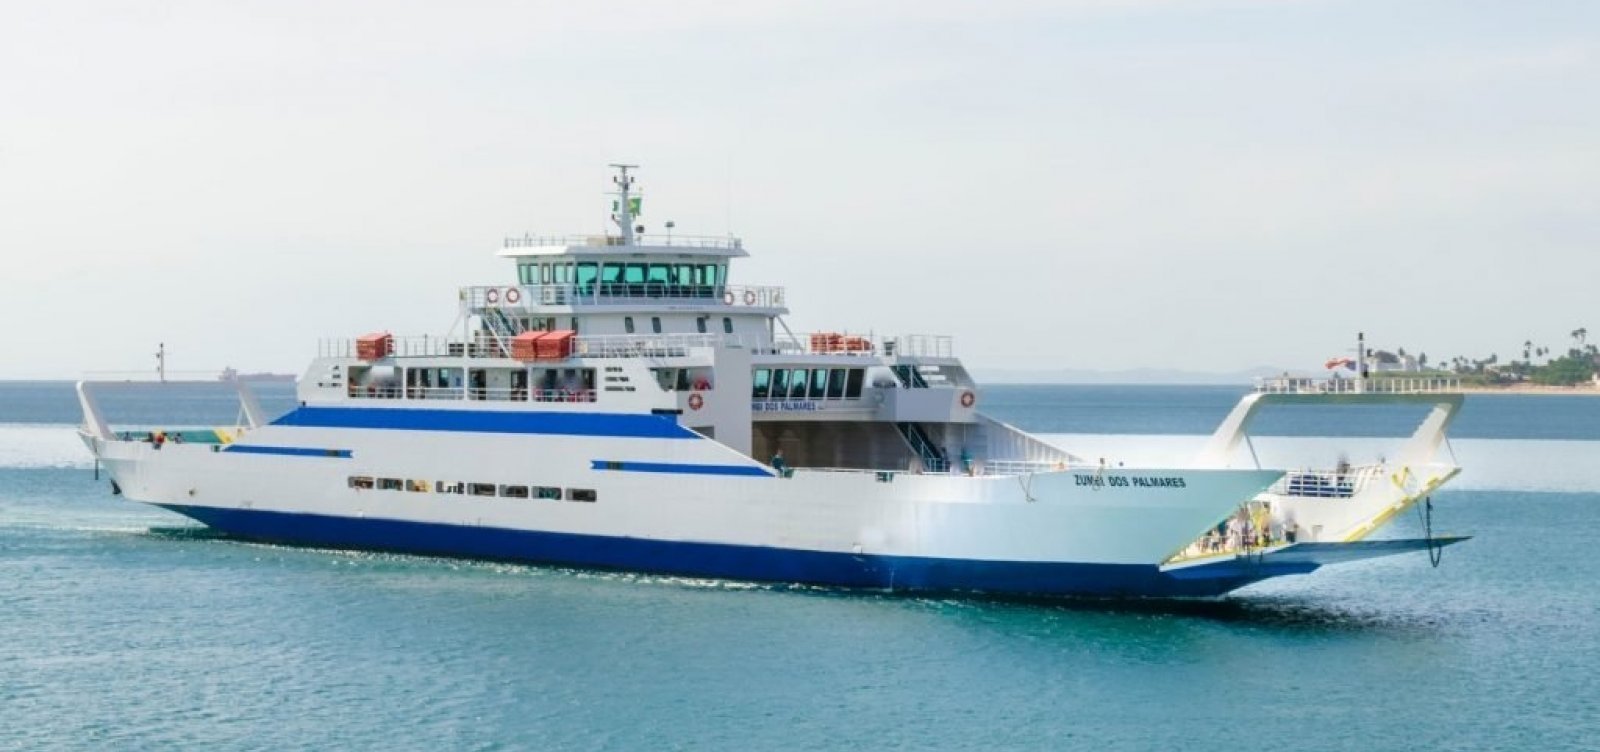 Nova tarifa do ferryboat começa a valer a partir desta segunda-feira